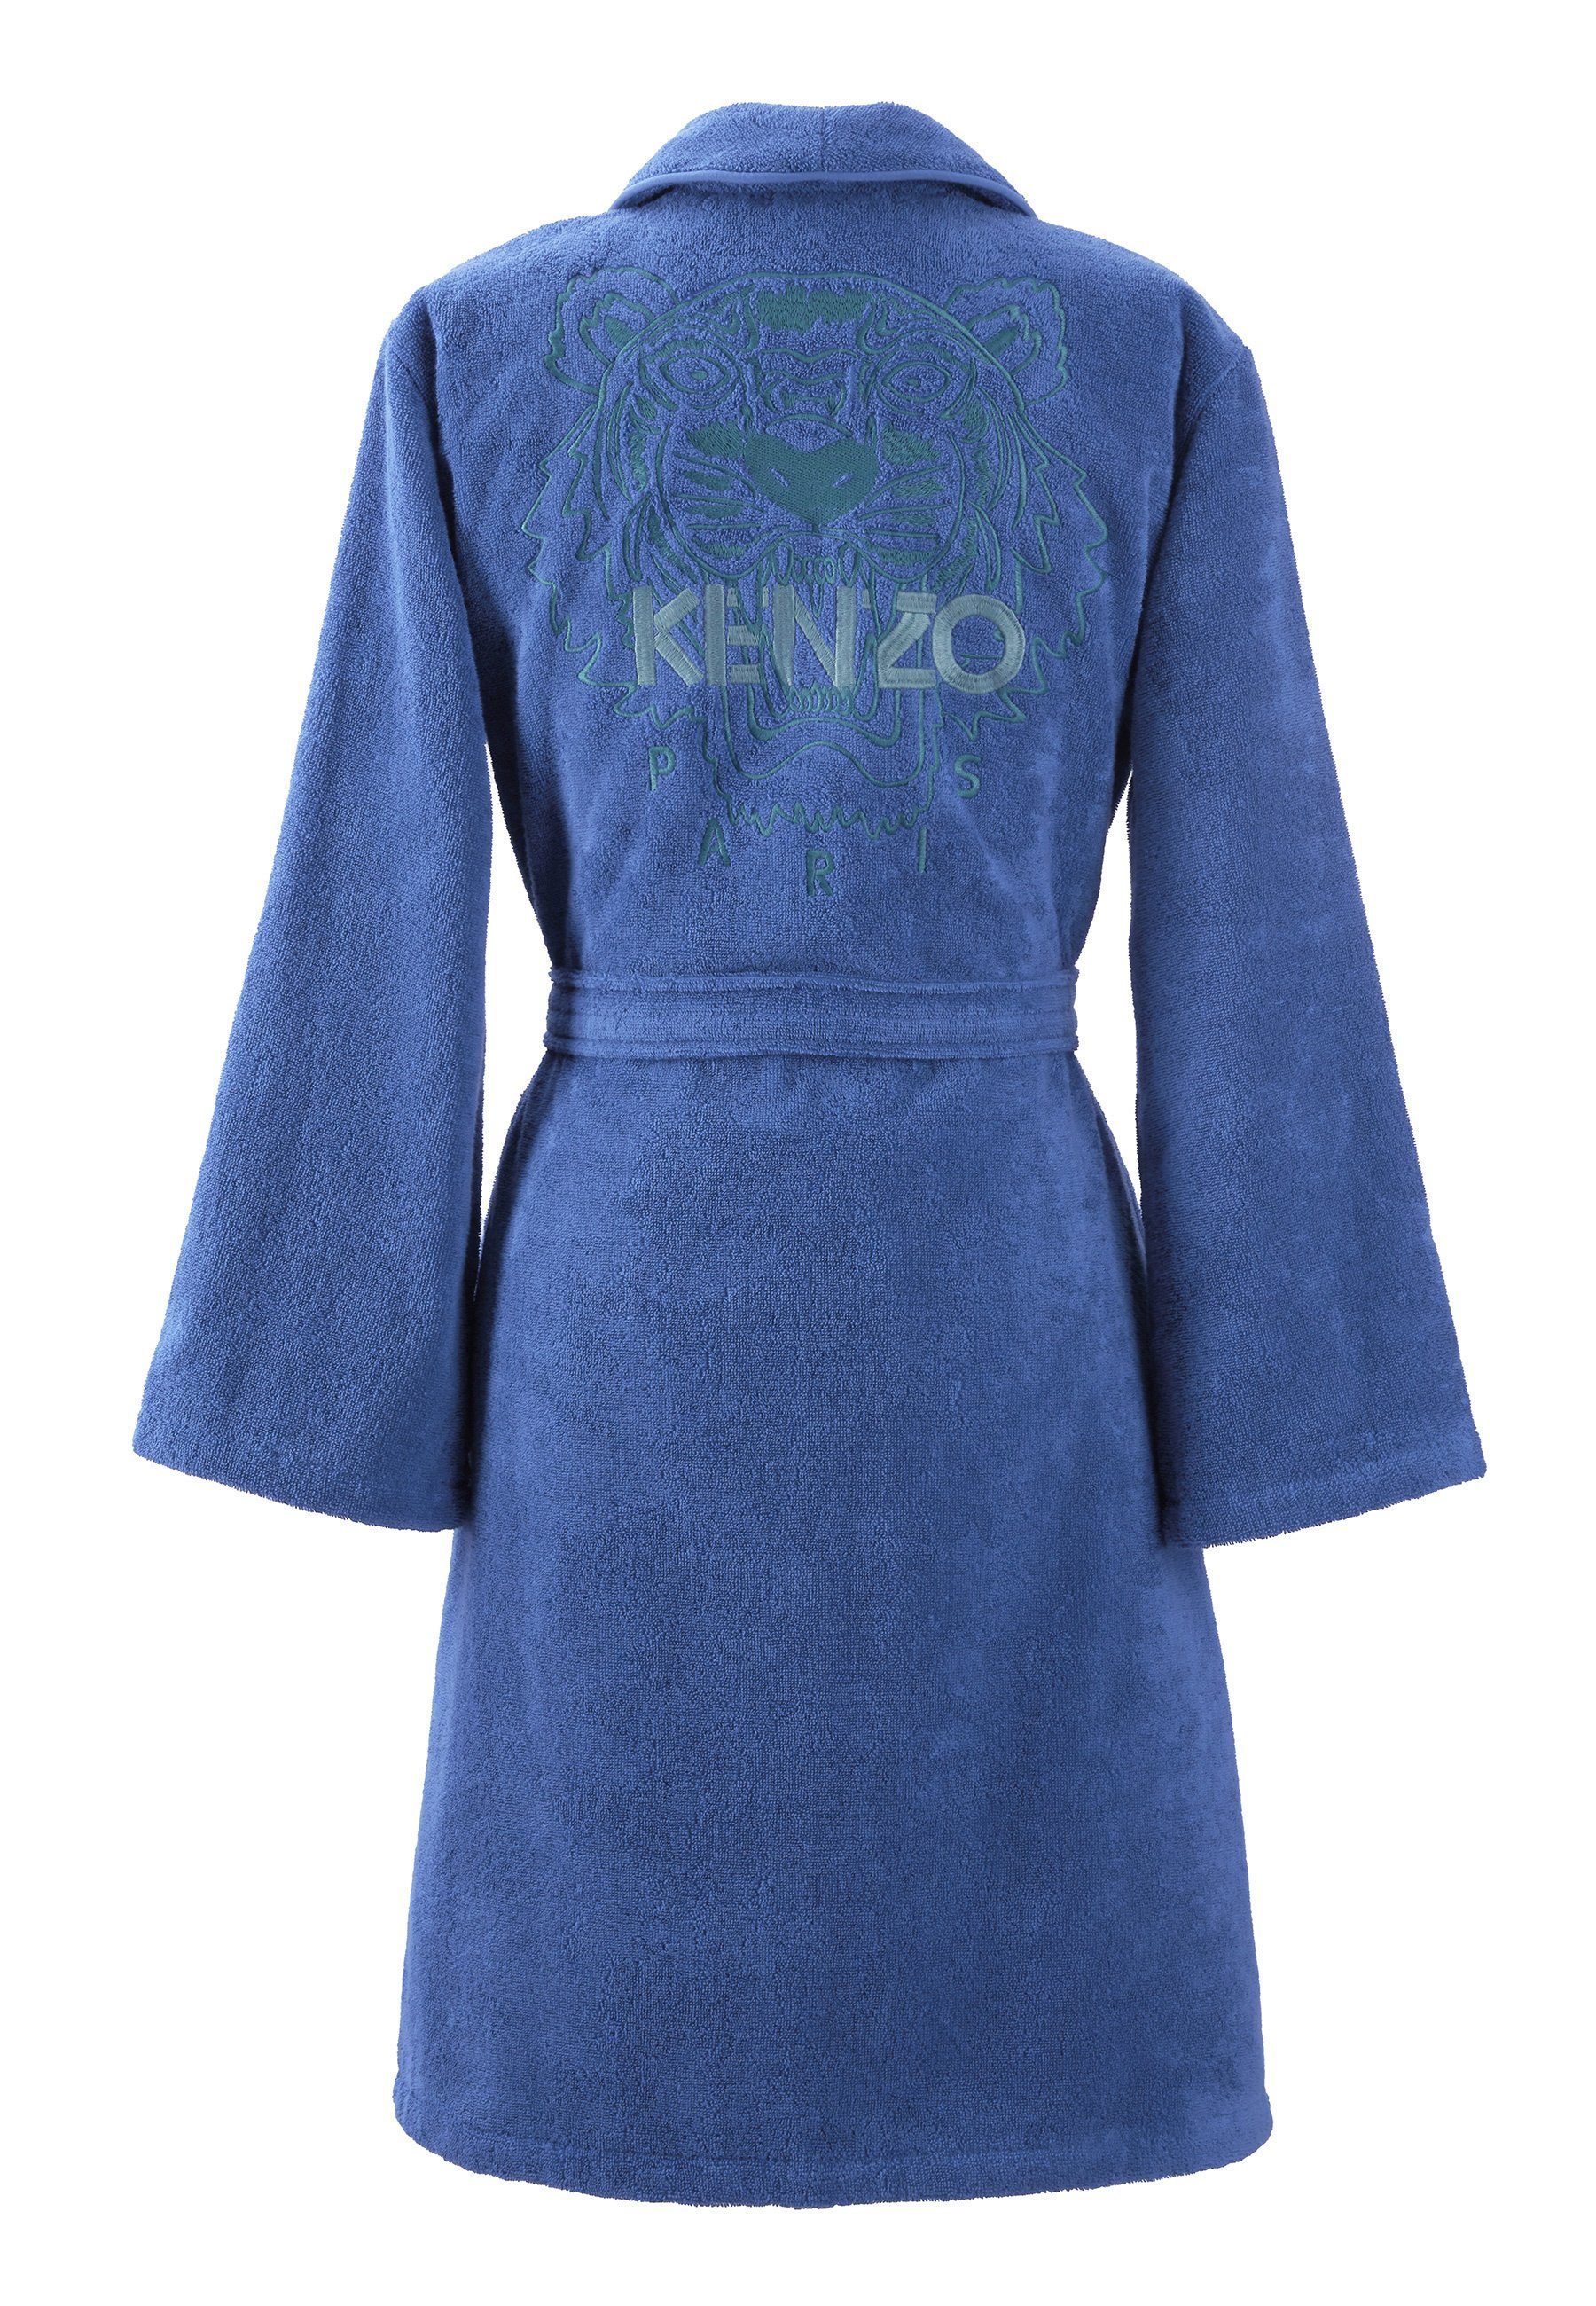 KENZO MAISON 100.0% K ICONIC, Baumwolle, Bademantel modernem Design mit